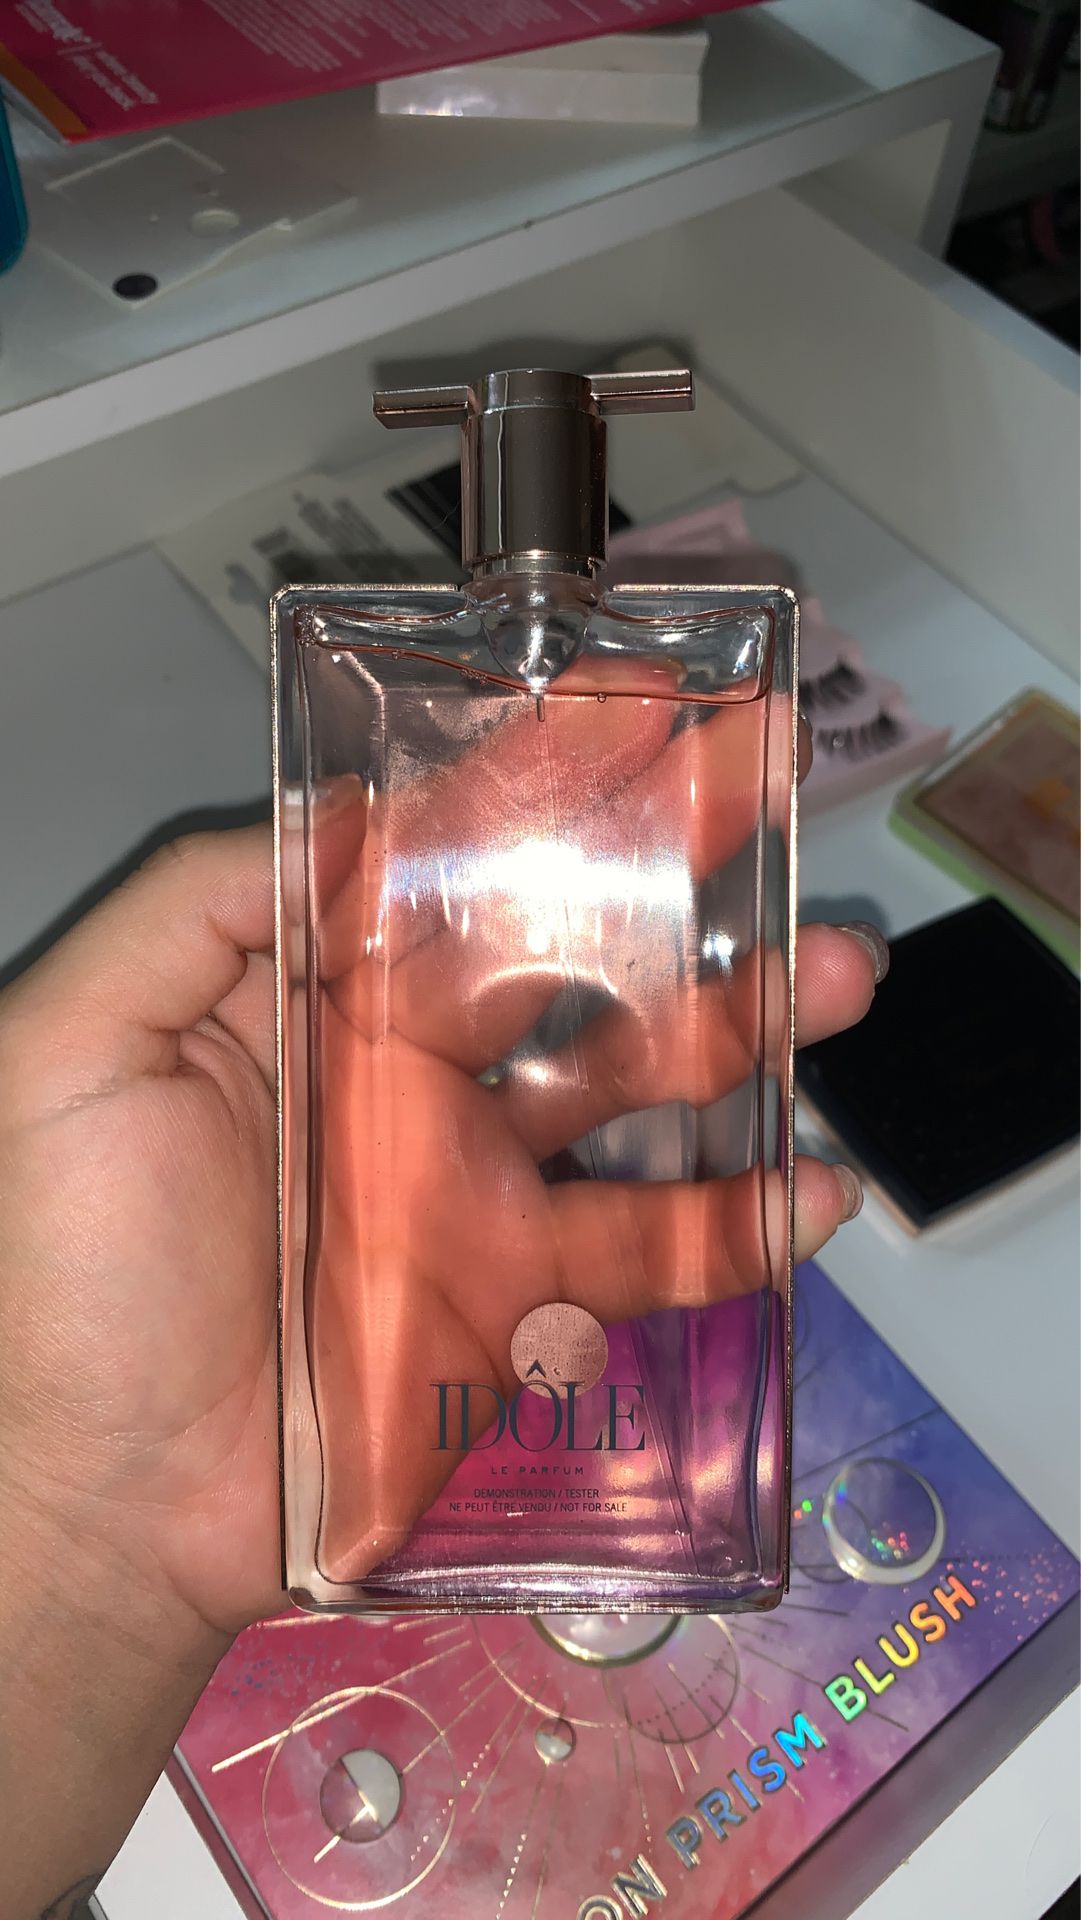 Idole Lancôme fragrance